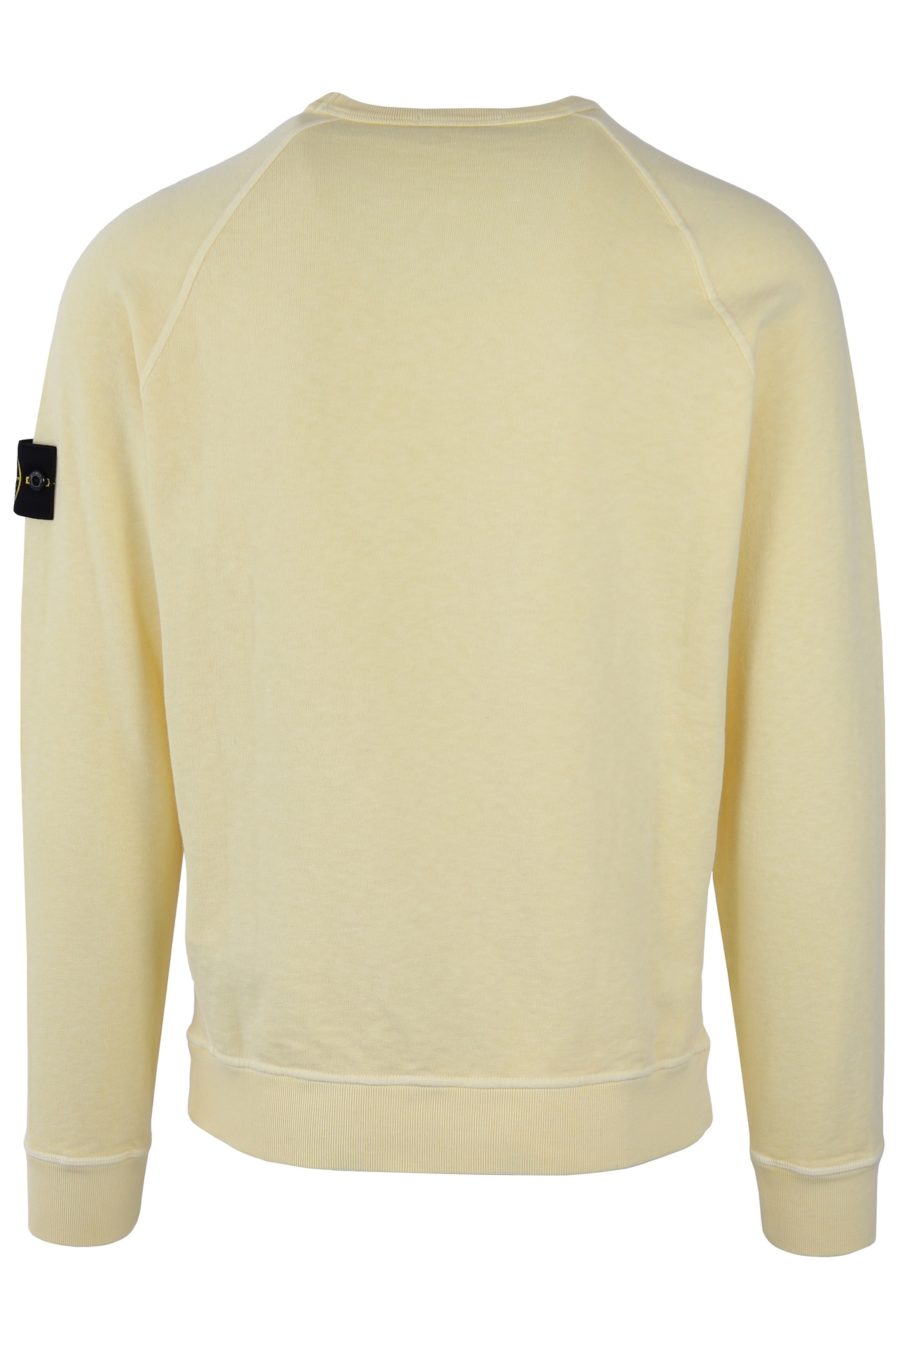 Stone Island gelbes Sweatshirt mit Patch - 43eb7128e652f1203dc35f464b5408b610be8665